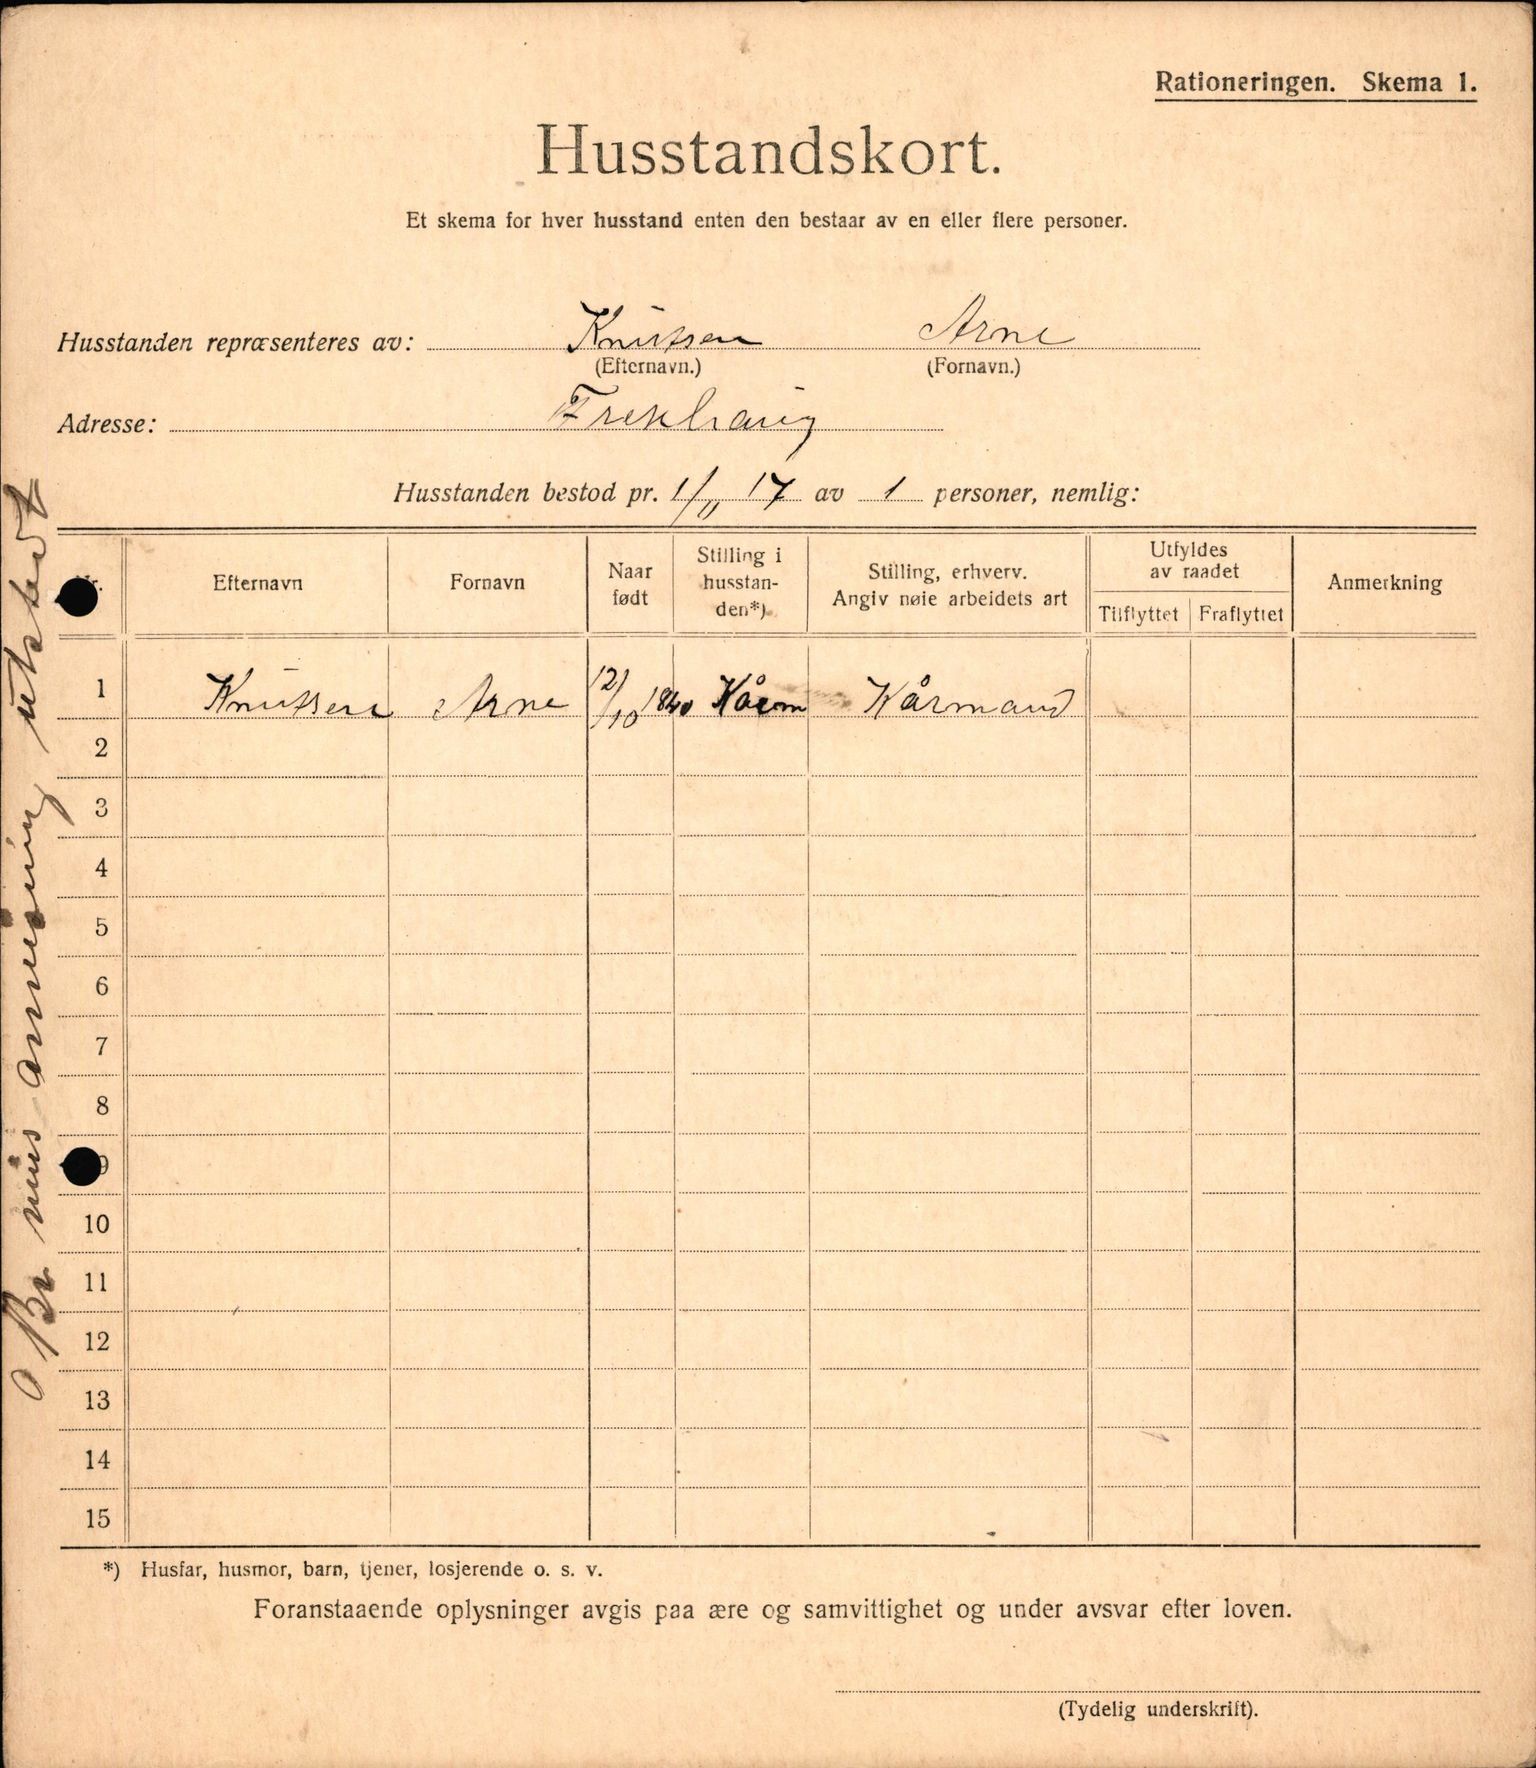 IKAH, Meland kommune, Provianteringsrådet, Husstander per 01.11.1917, 1917-1918, s. 160